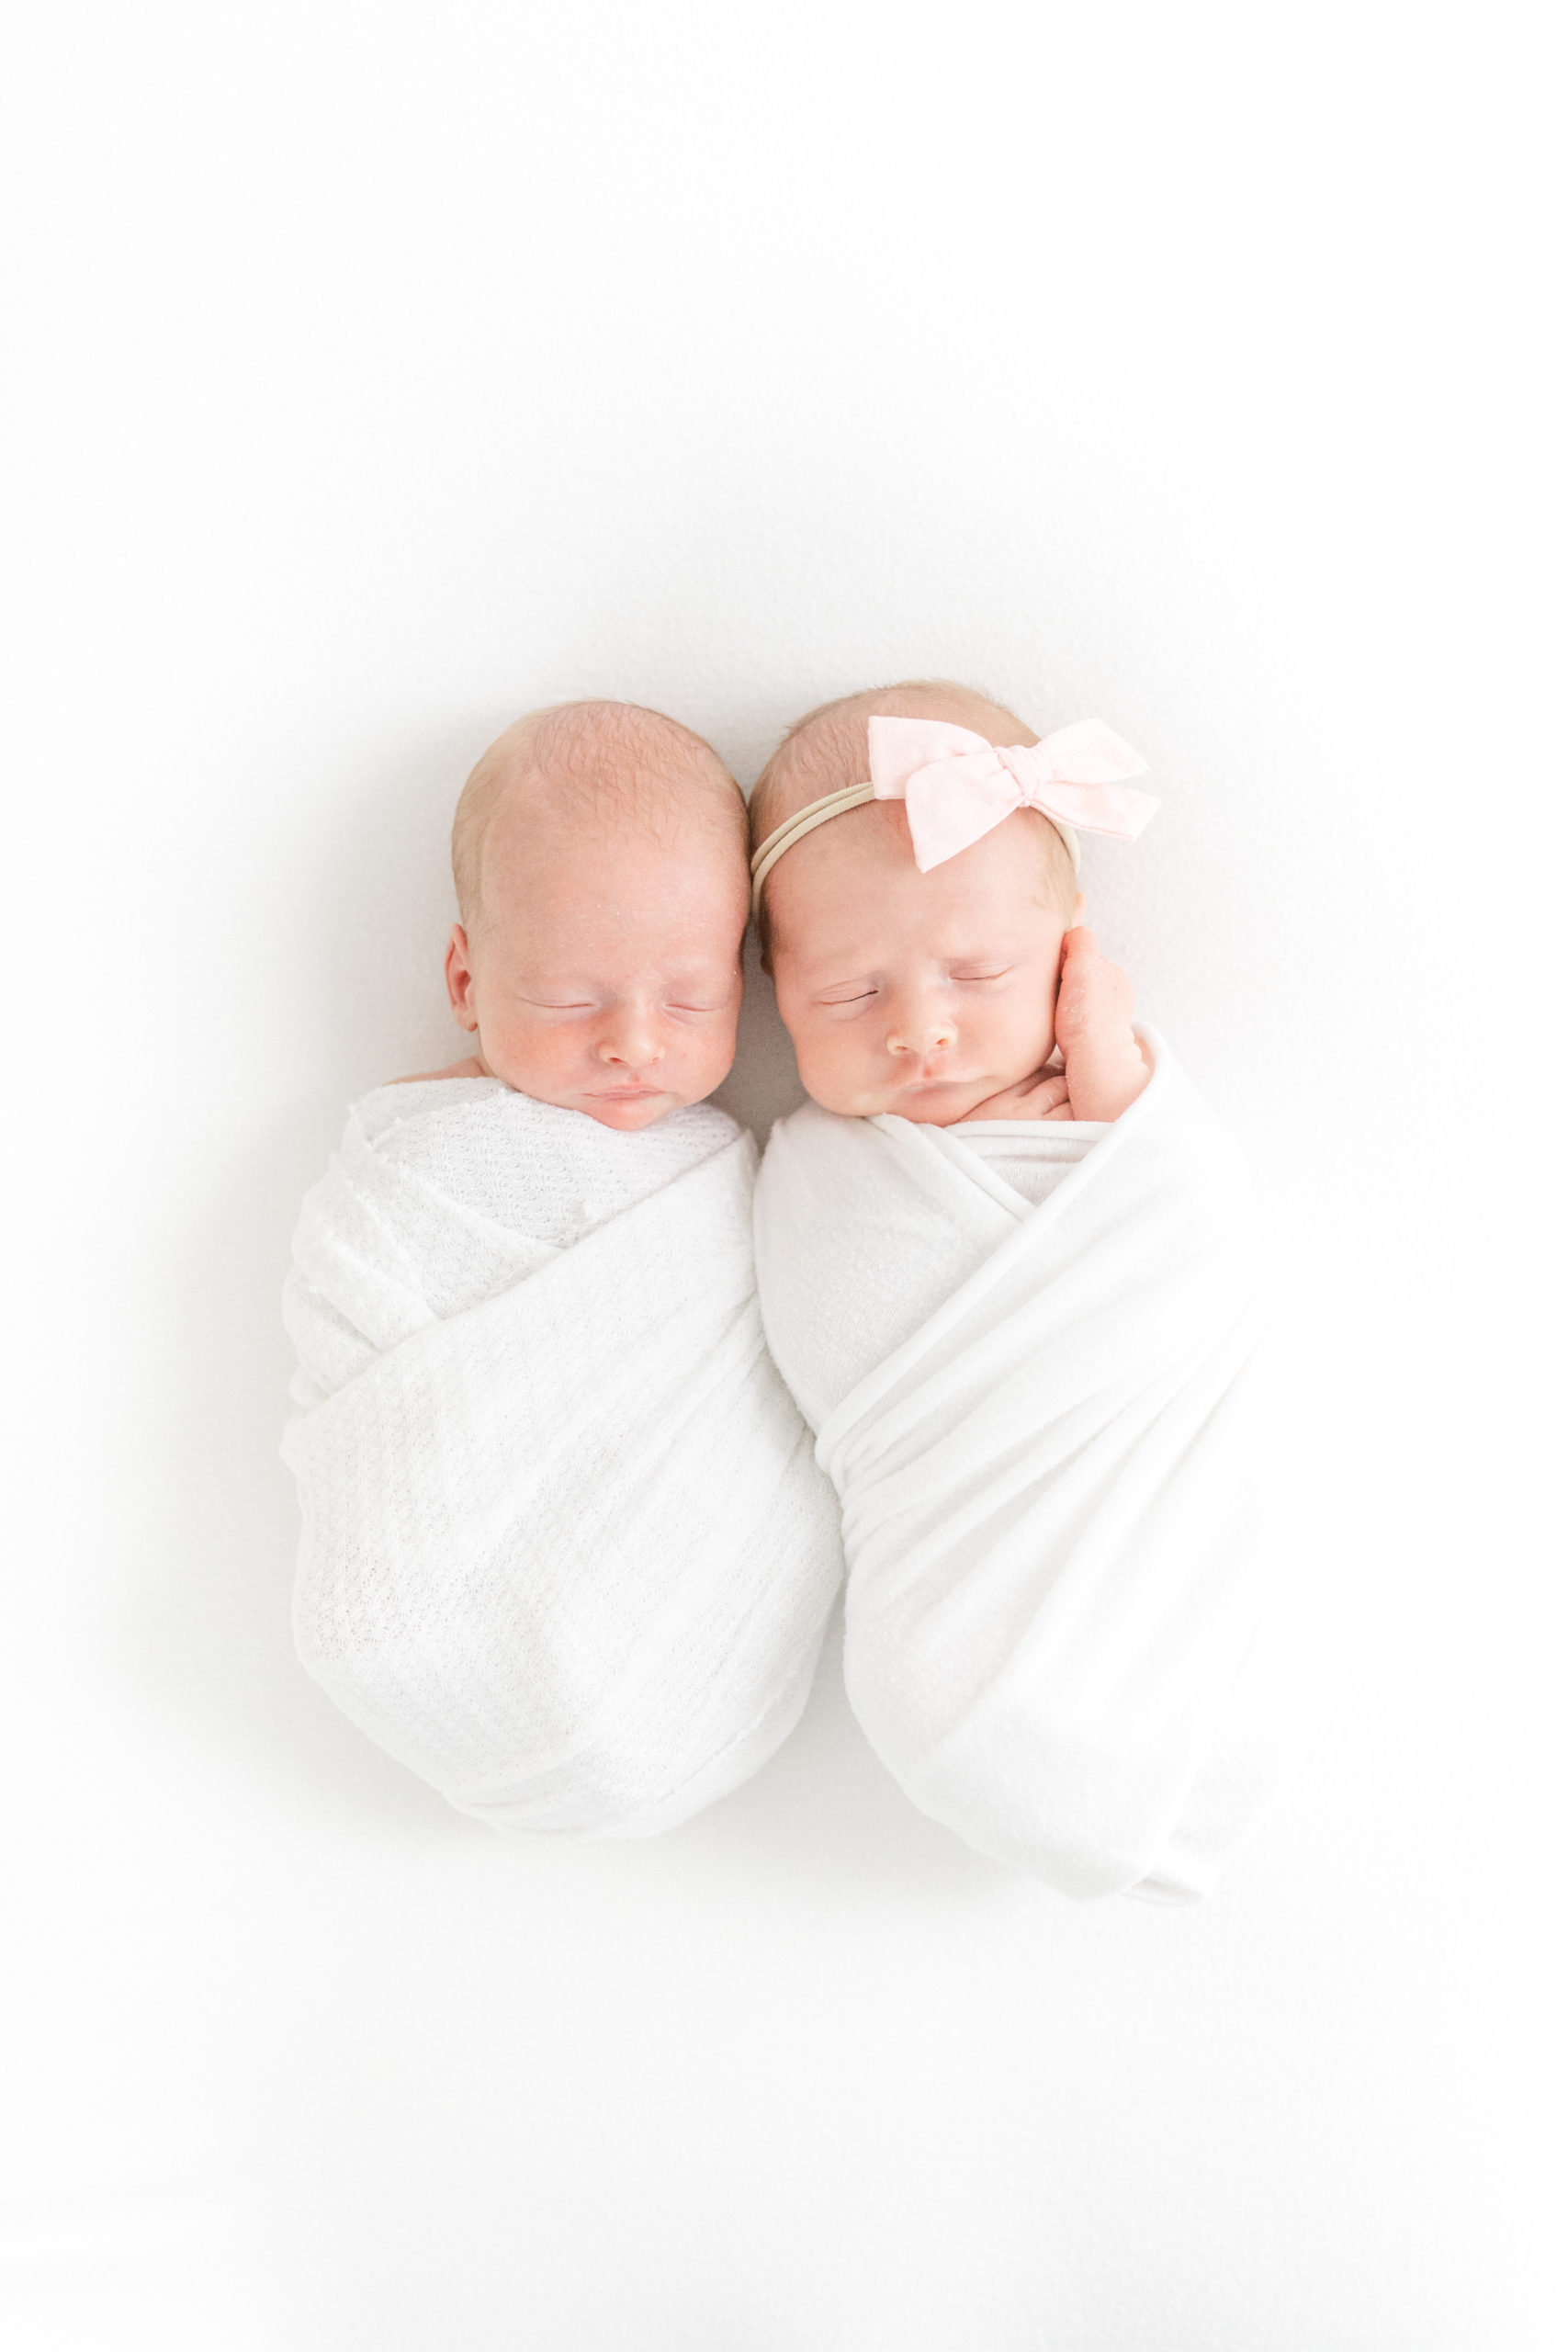 Atlanta Newborn Photographer Twins Studio Session